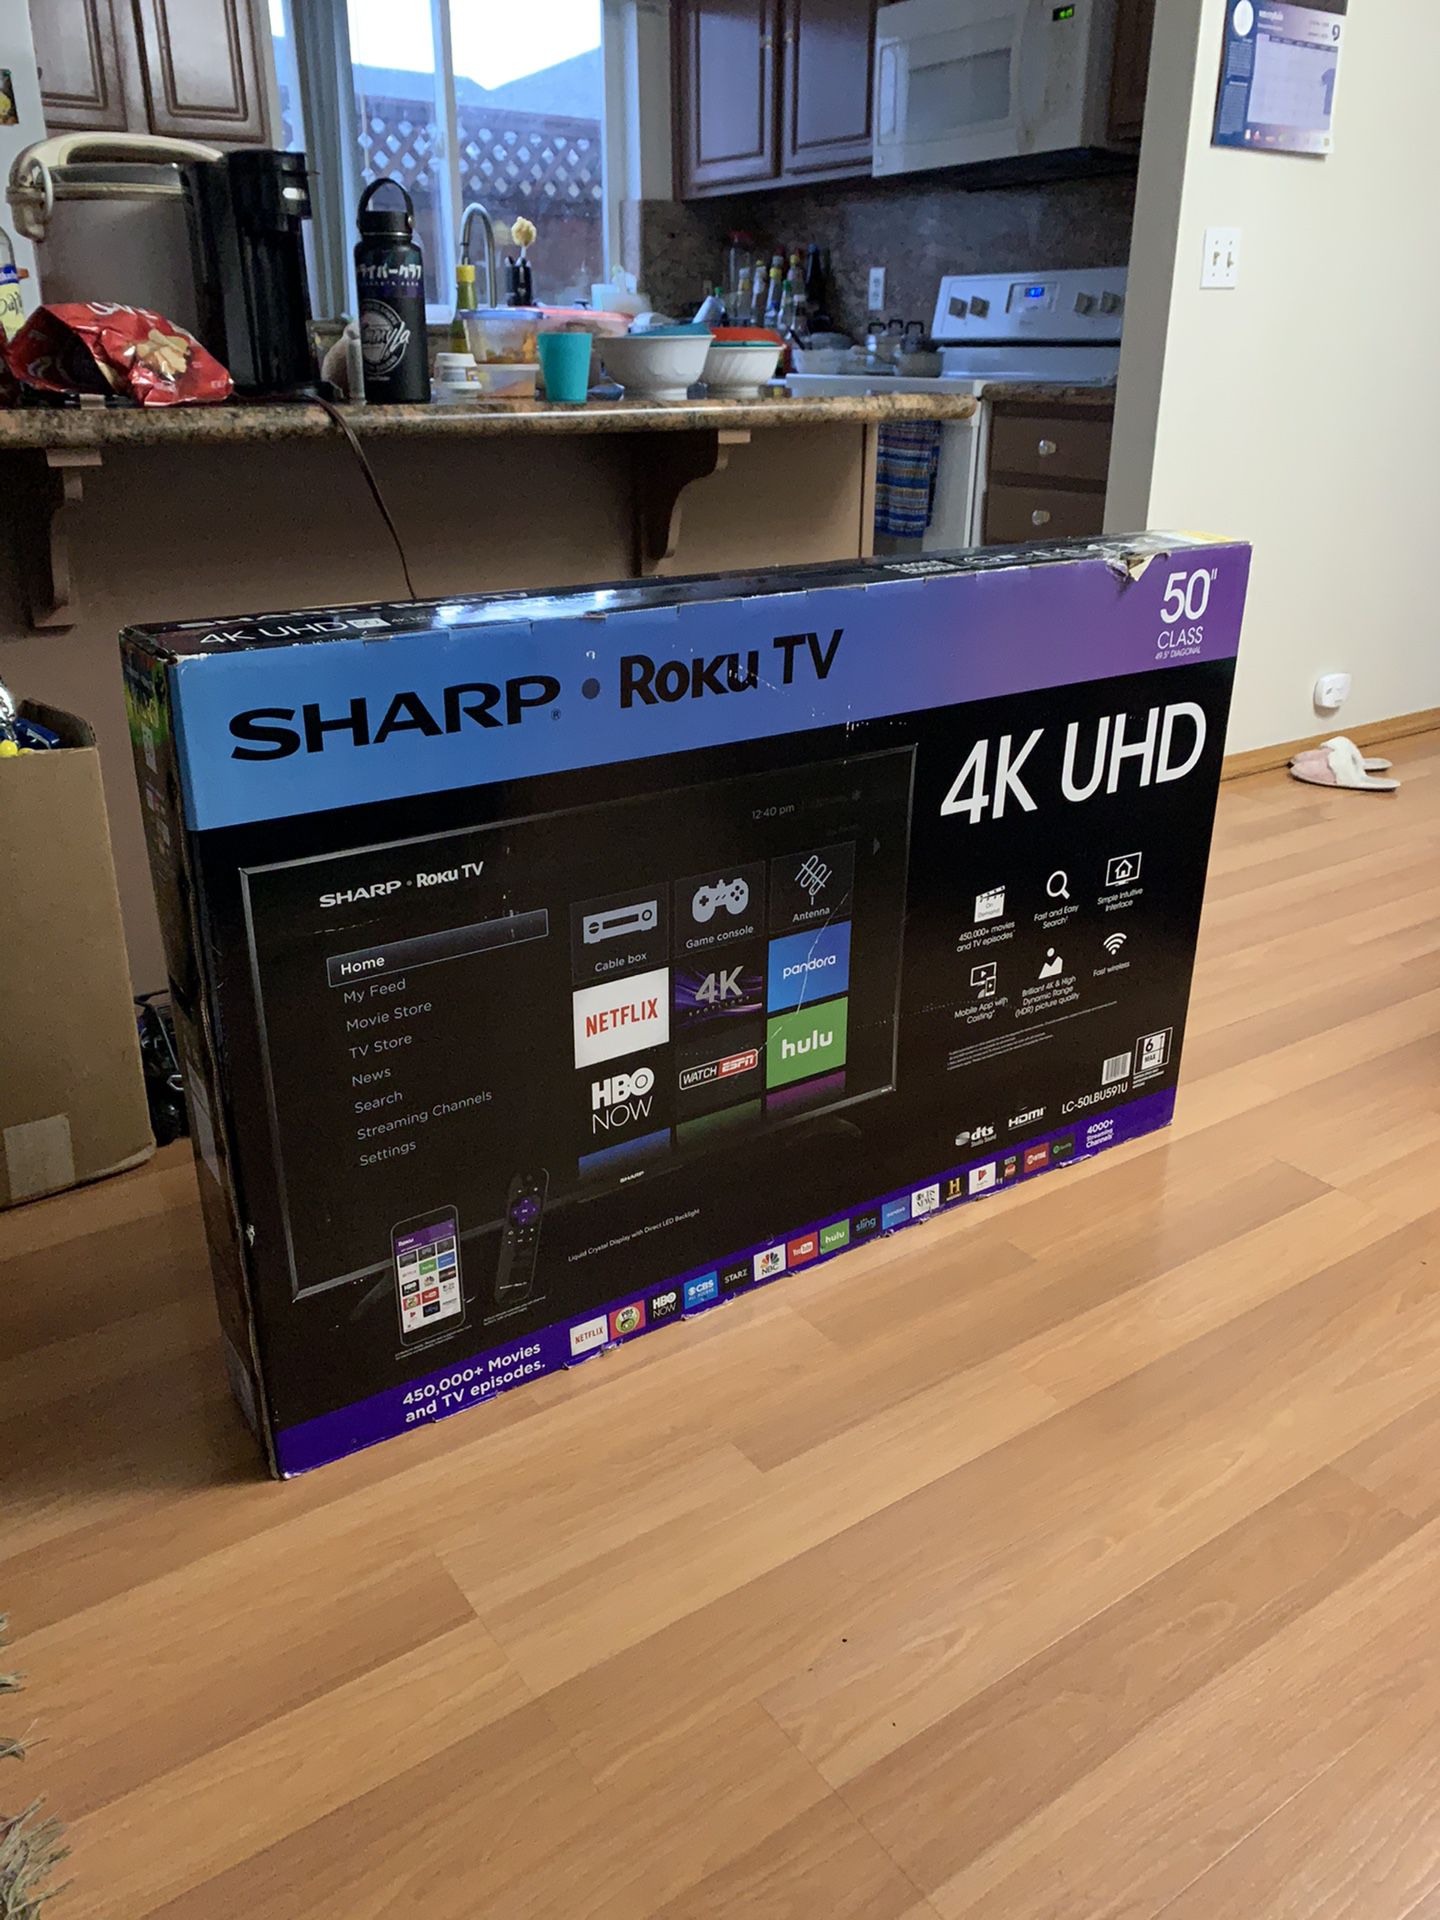 Sharp Roku Tv 50 inch 4K UHD